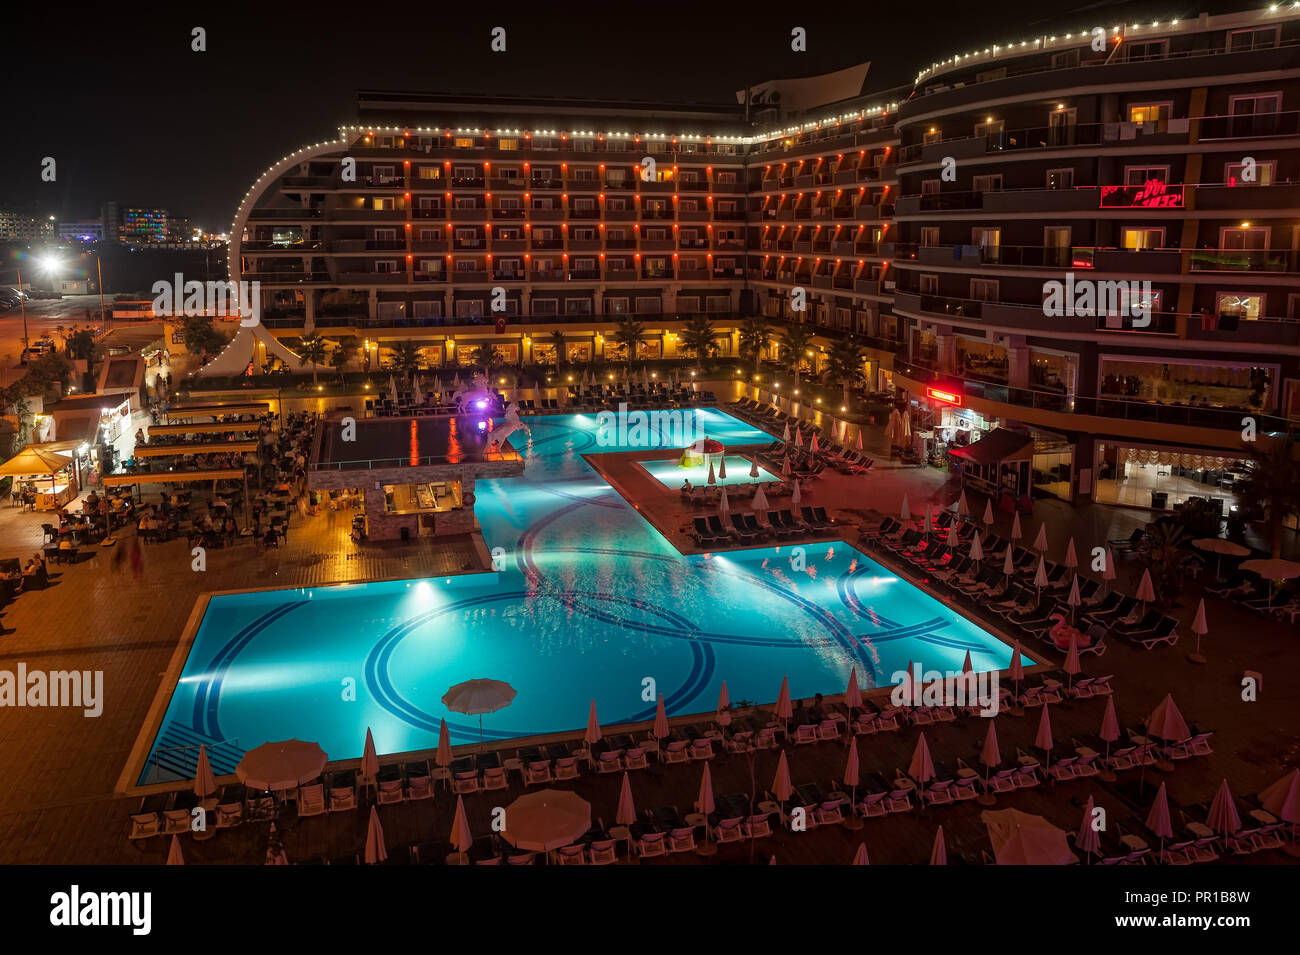 Luxury hotel with pool at night. Turkey Stock Photo